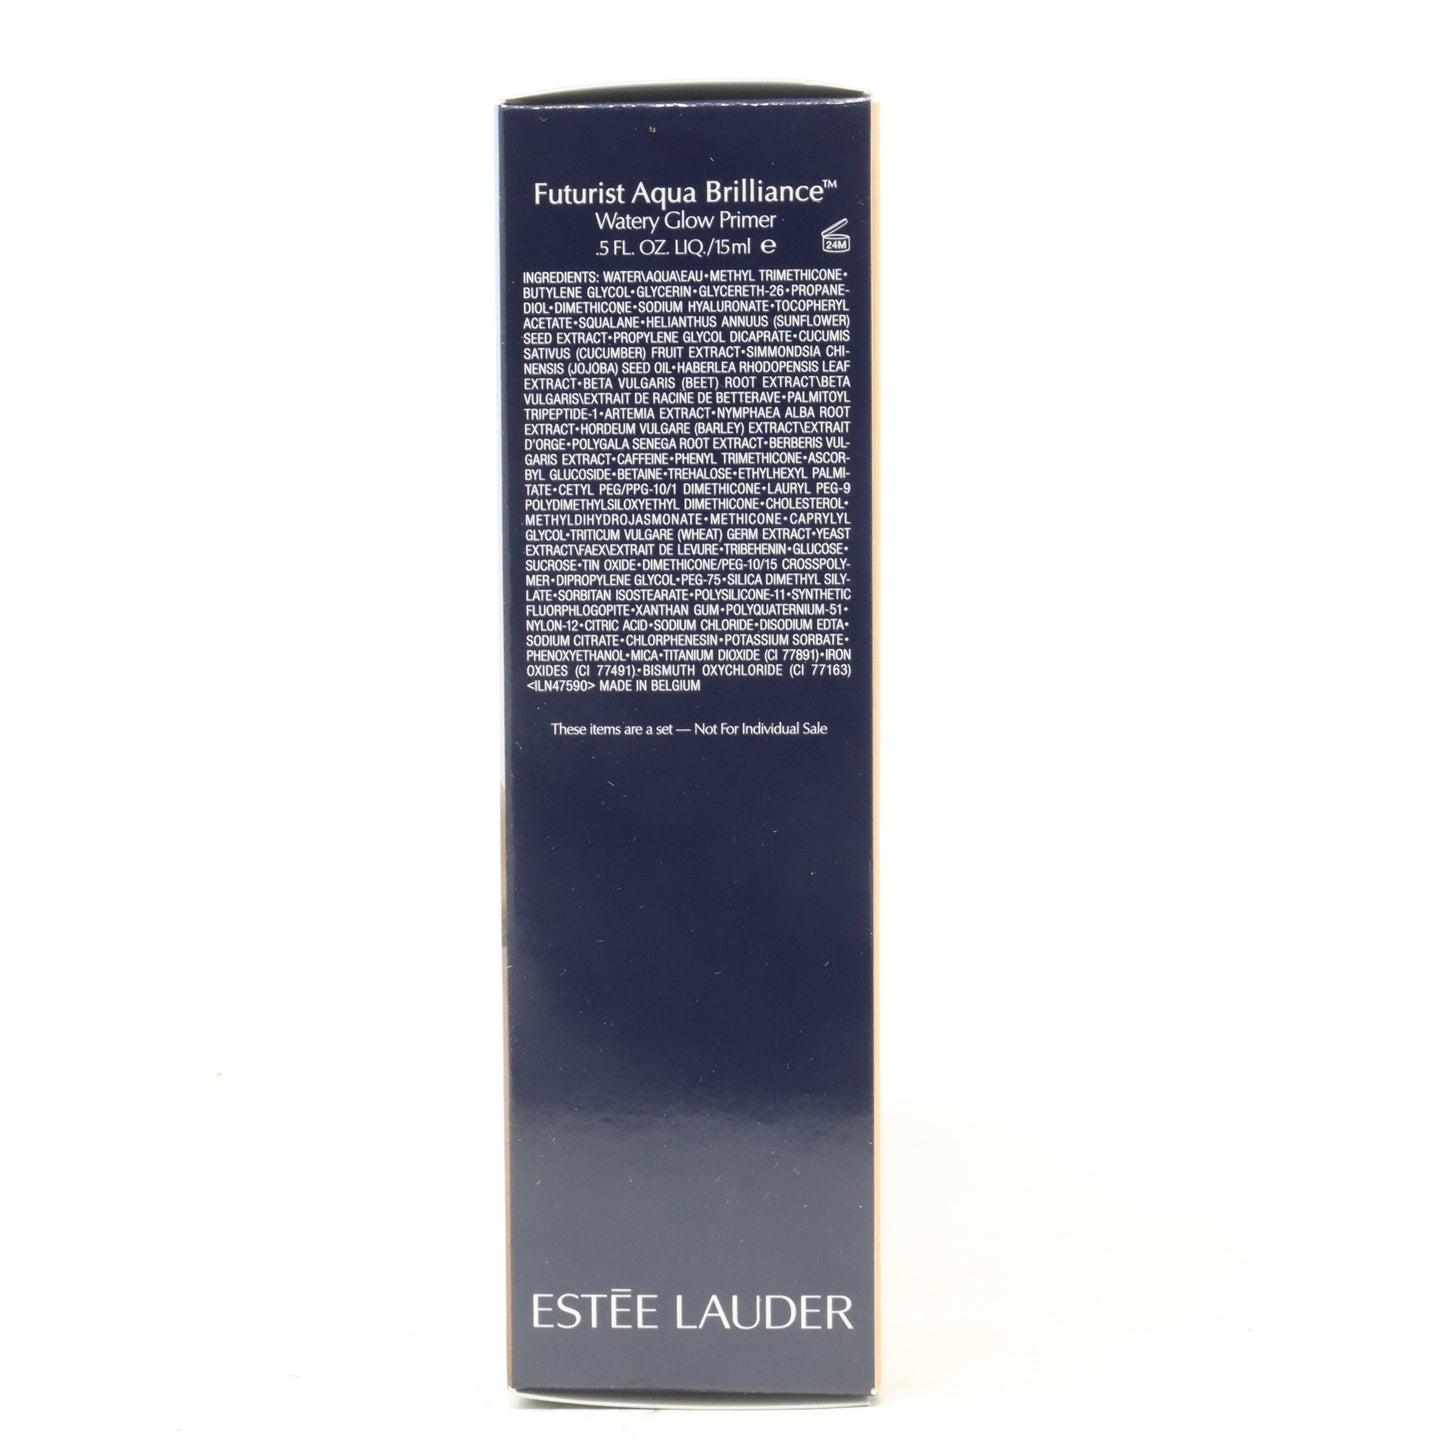 Estee Lauder Meet Your Match Double Wear Makeup Kit  / New With Box